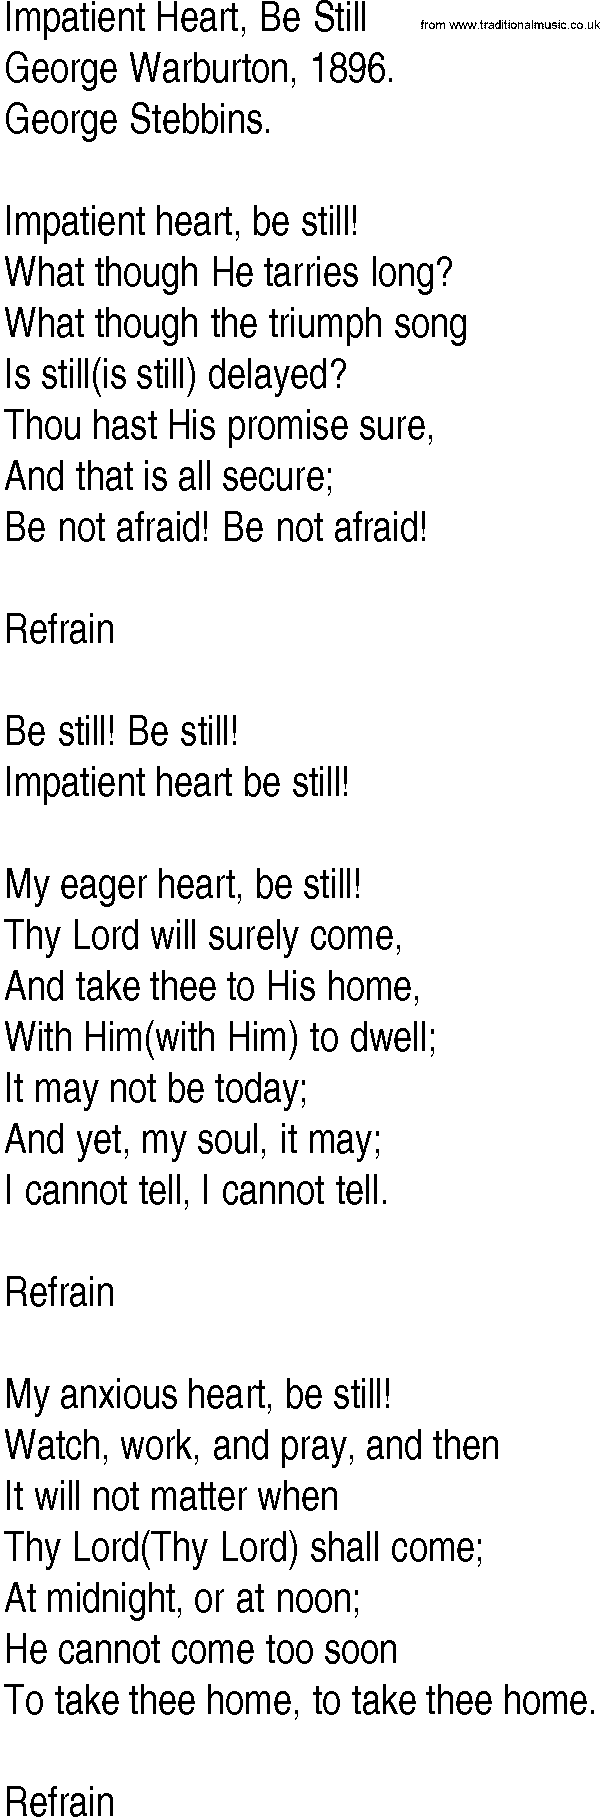 Hymn and Gospel Song: Impatient Heart, Be Still by George Warburton lyrics